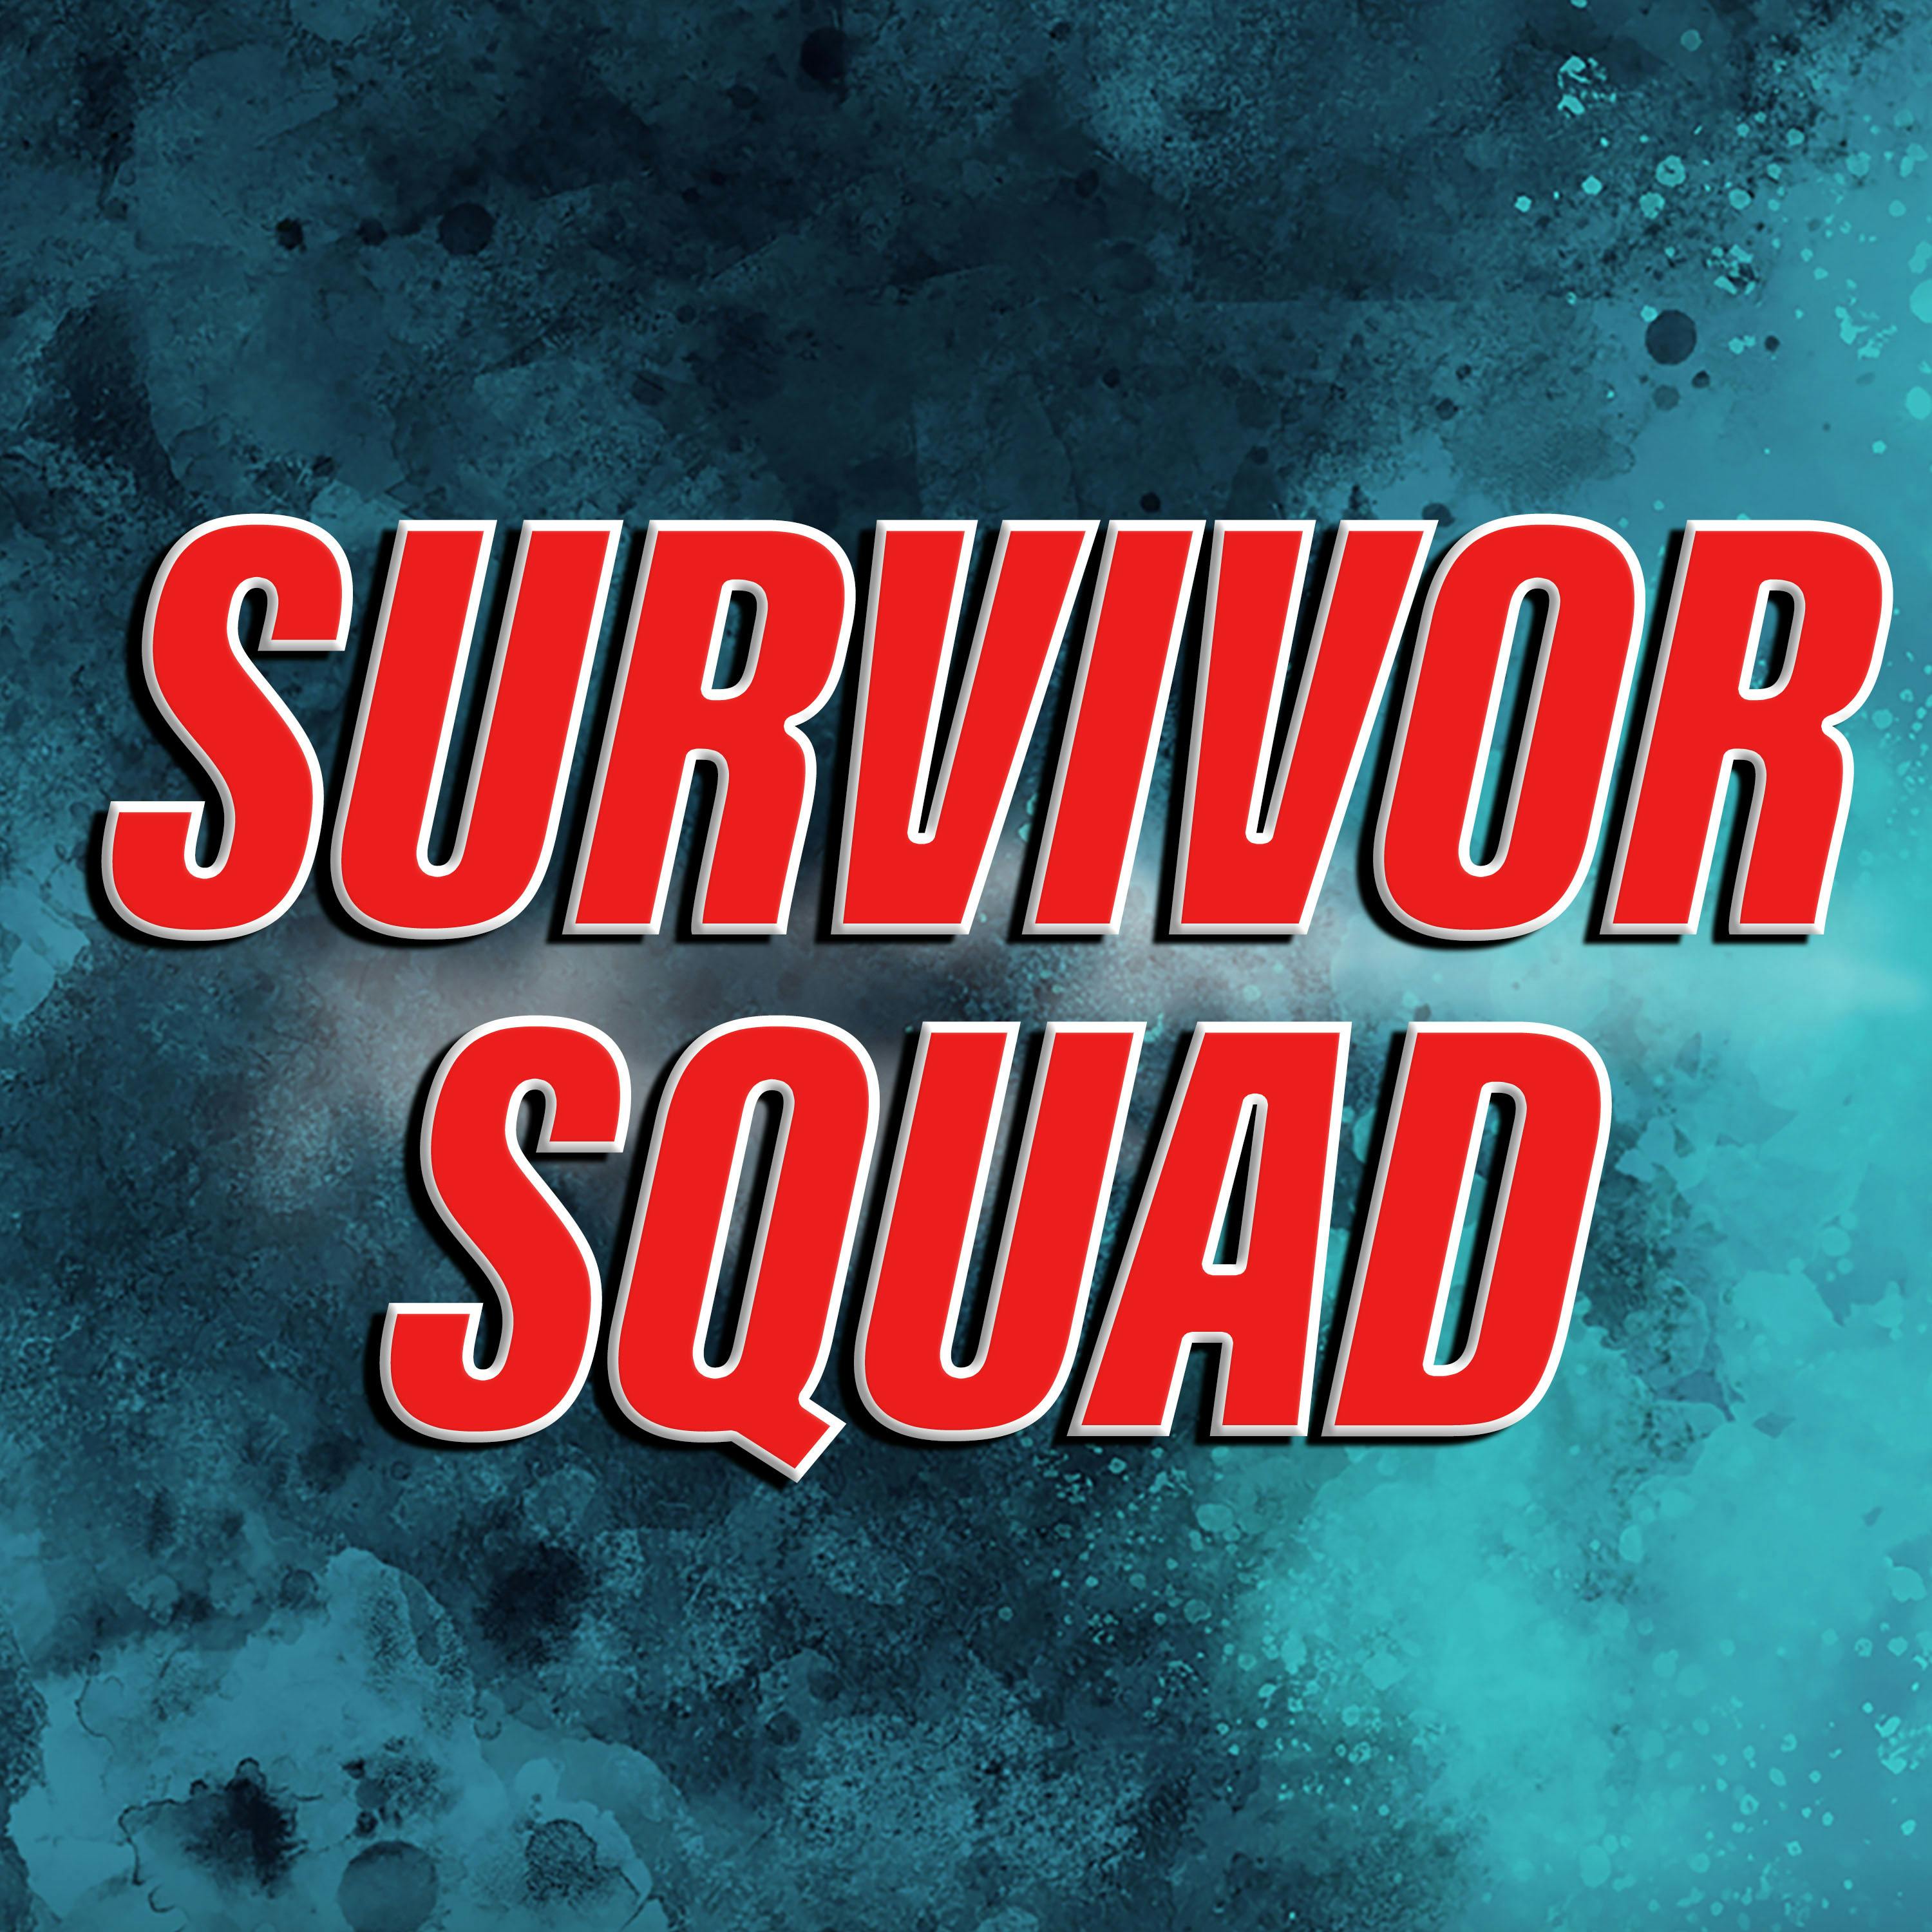 The Survivor Squad podcast show image